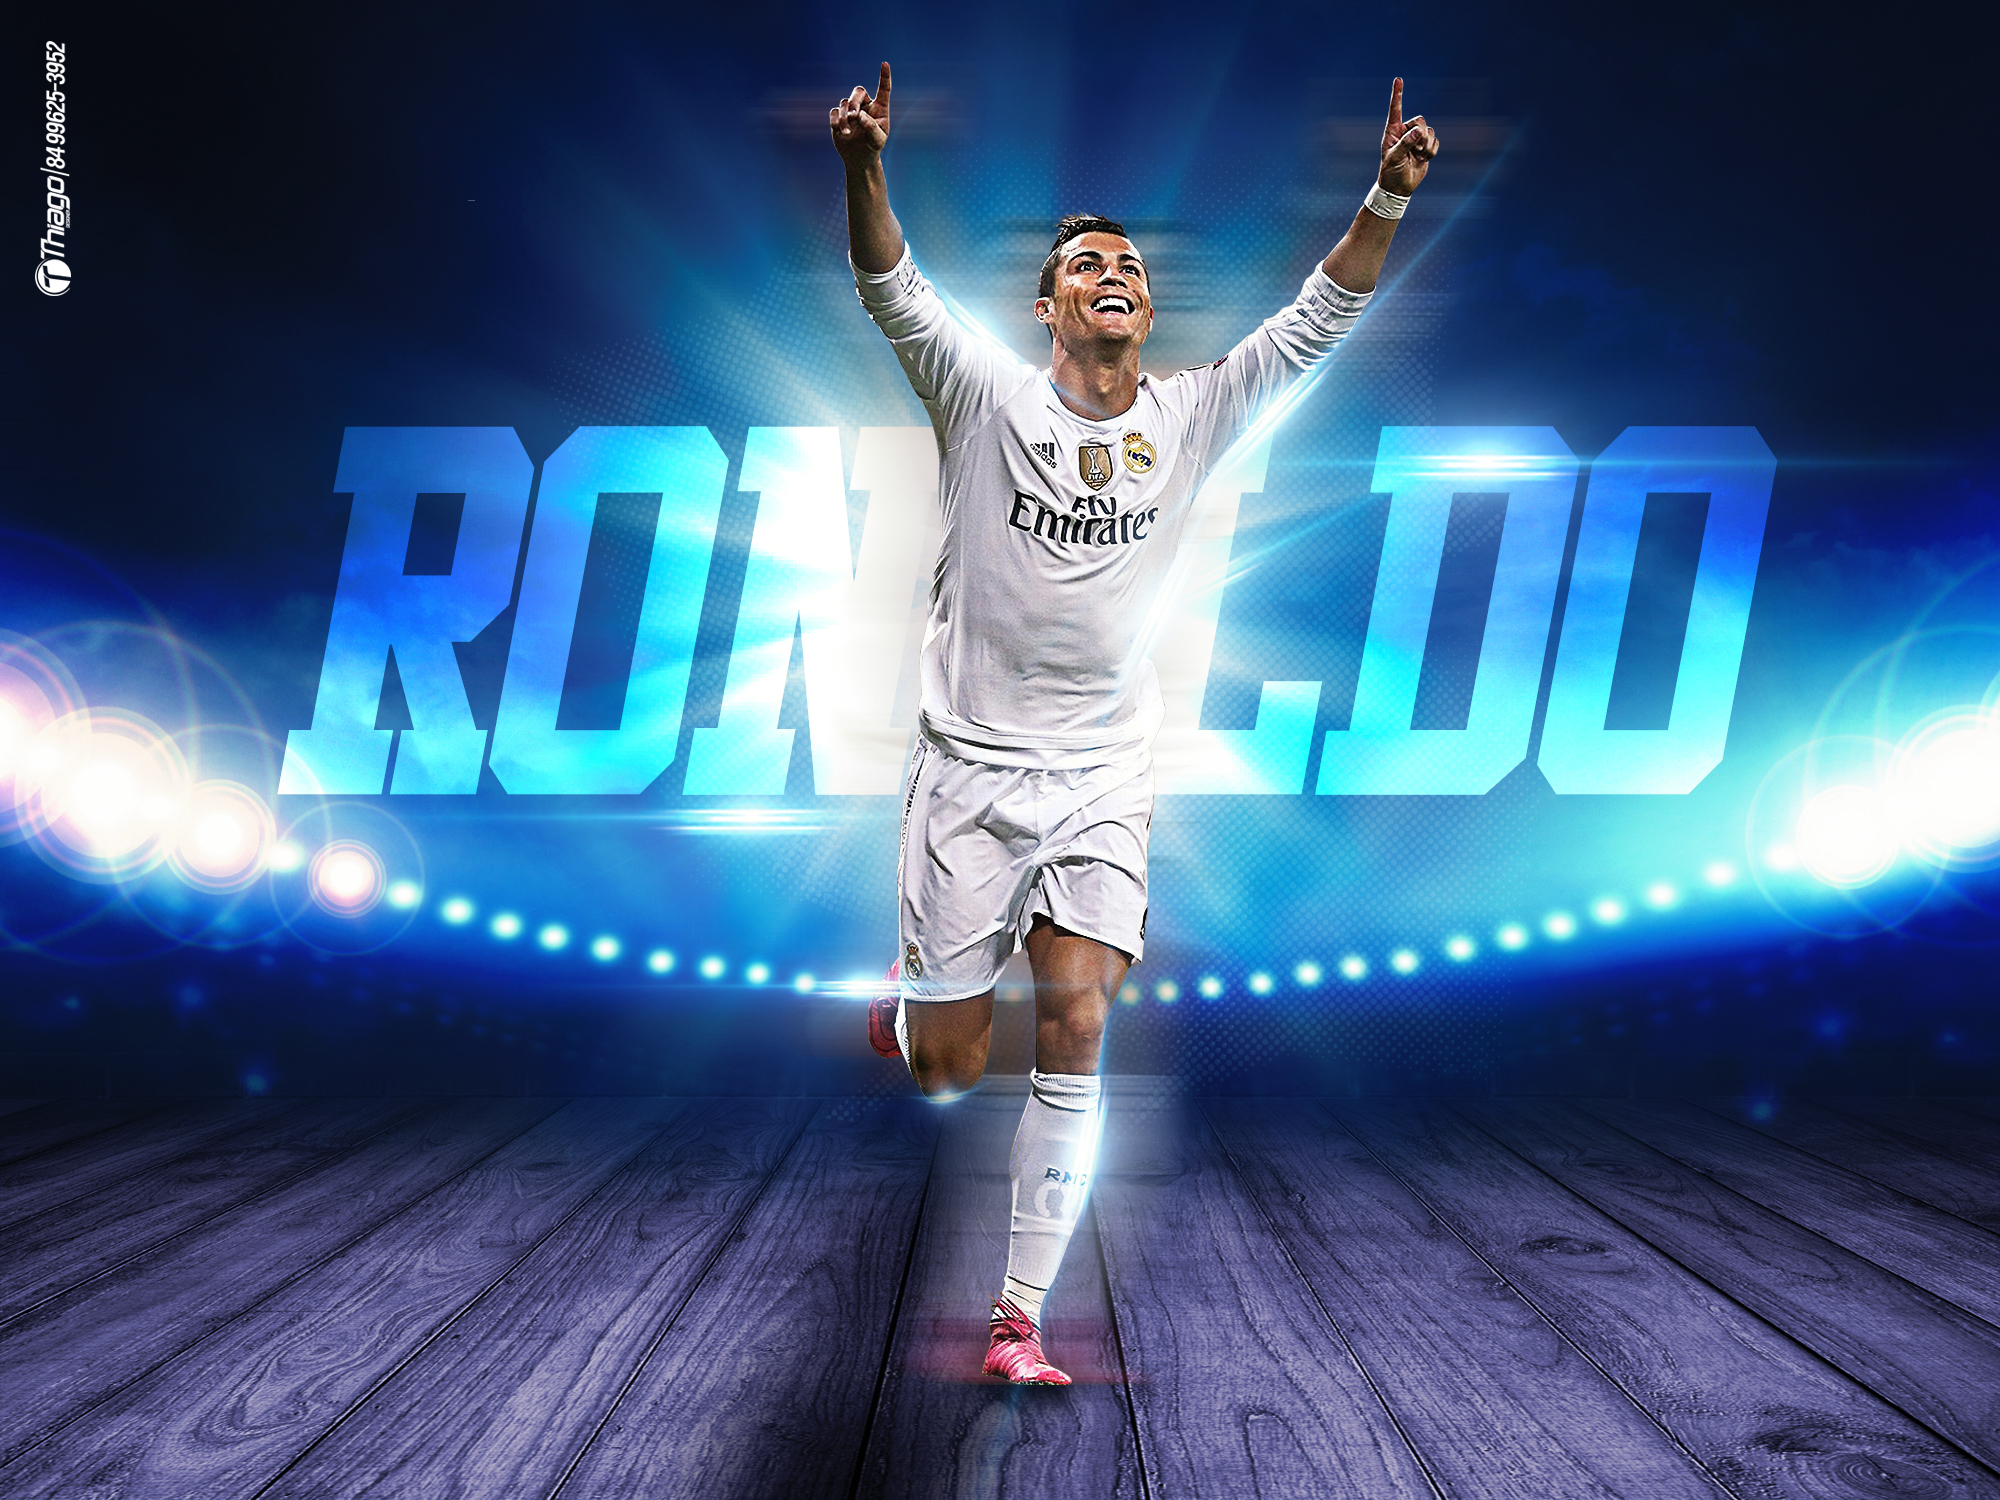 Wallpaper Cristiano Ronaldo By Thiagojustino On